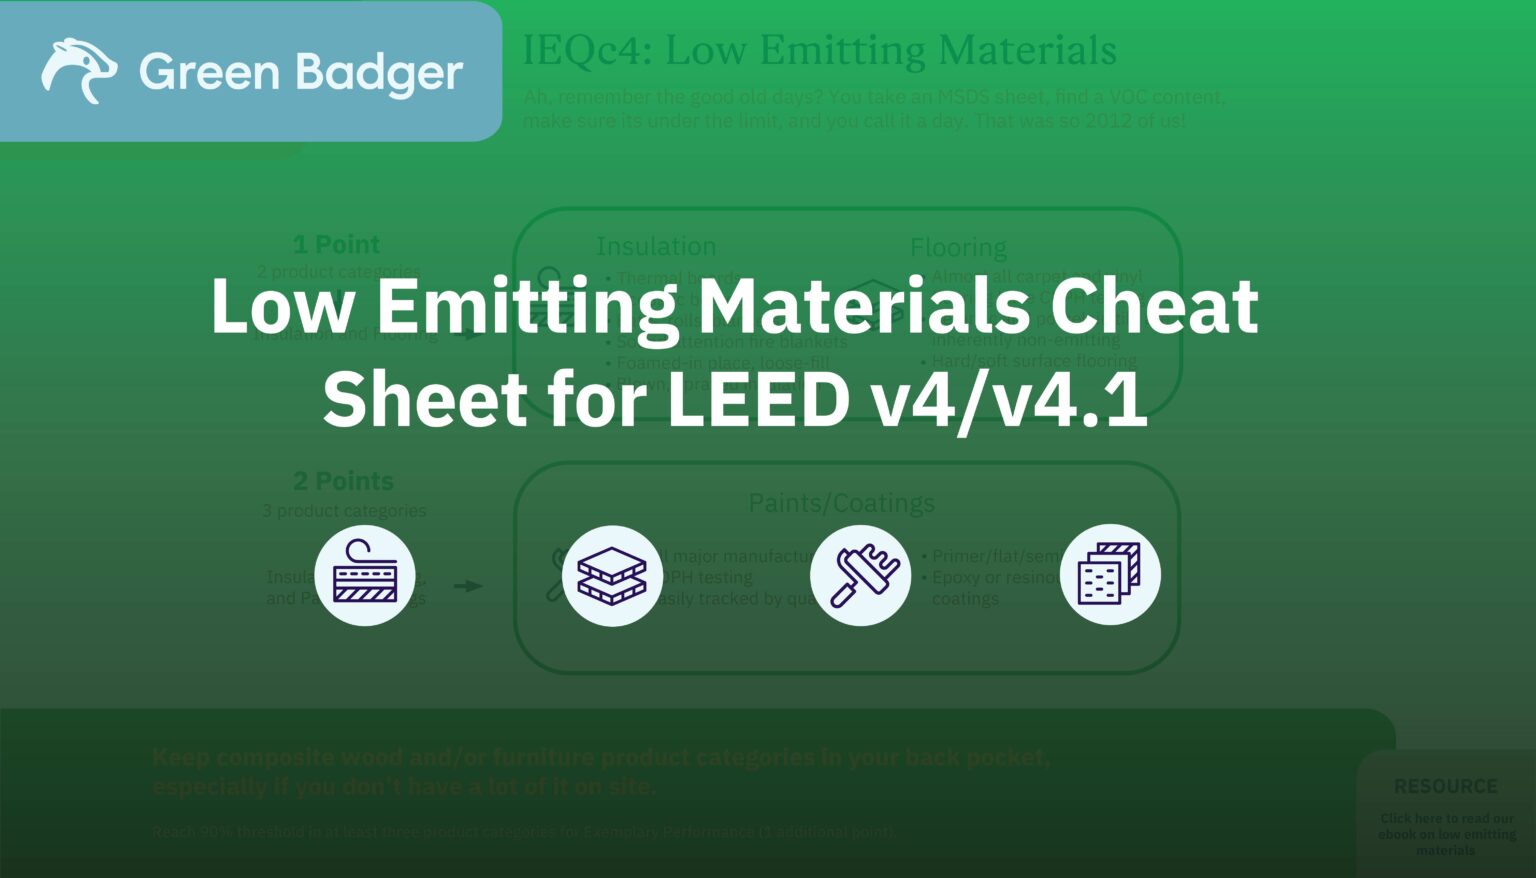 low emitting materials cheat sheet thumbnail - updated